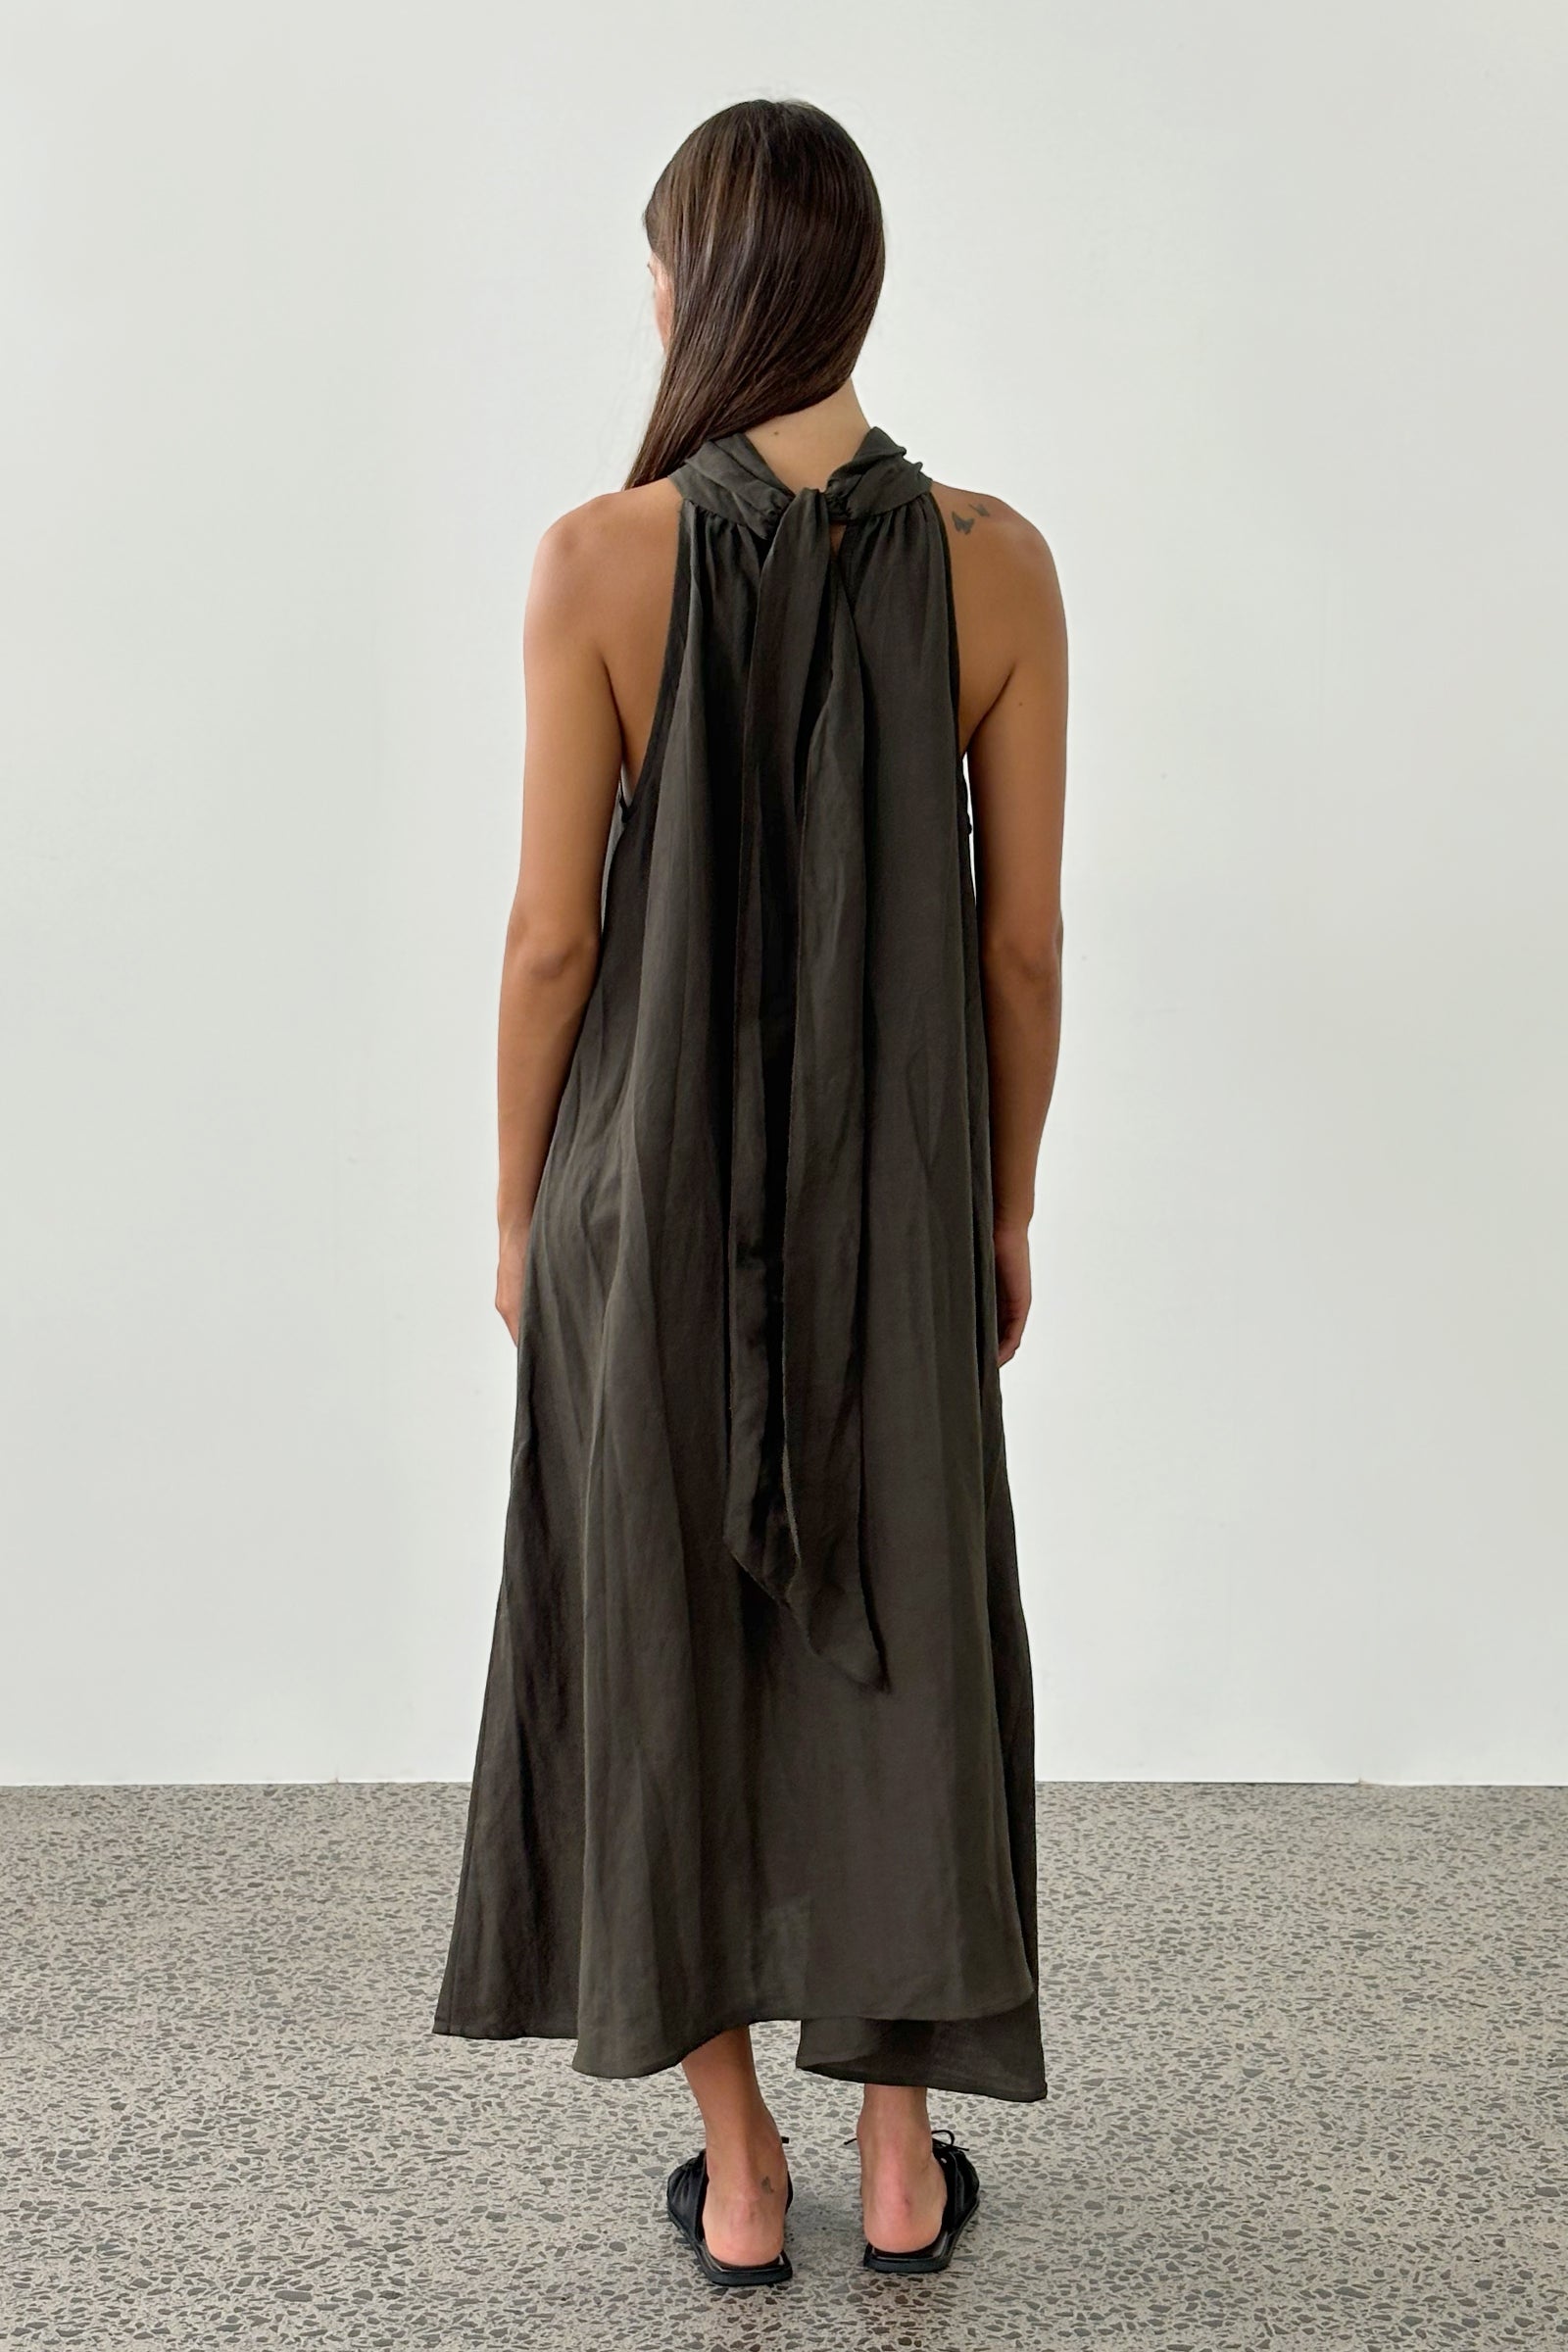 Lowe Dress in Dark Khaki